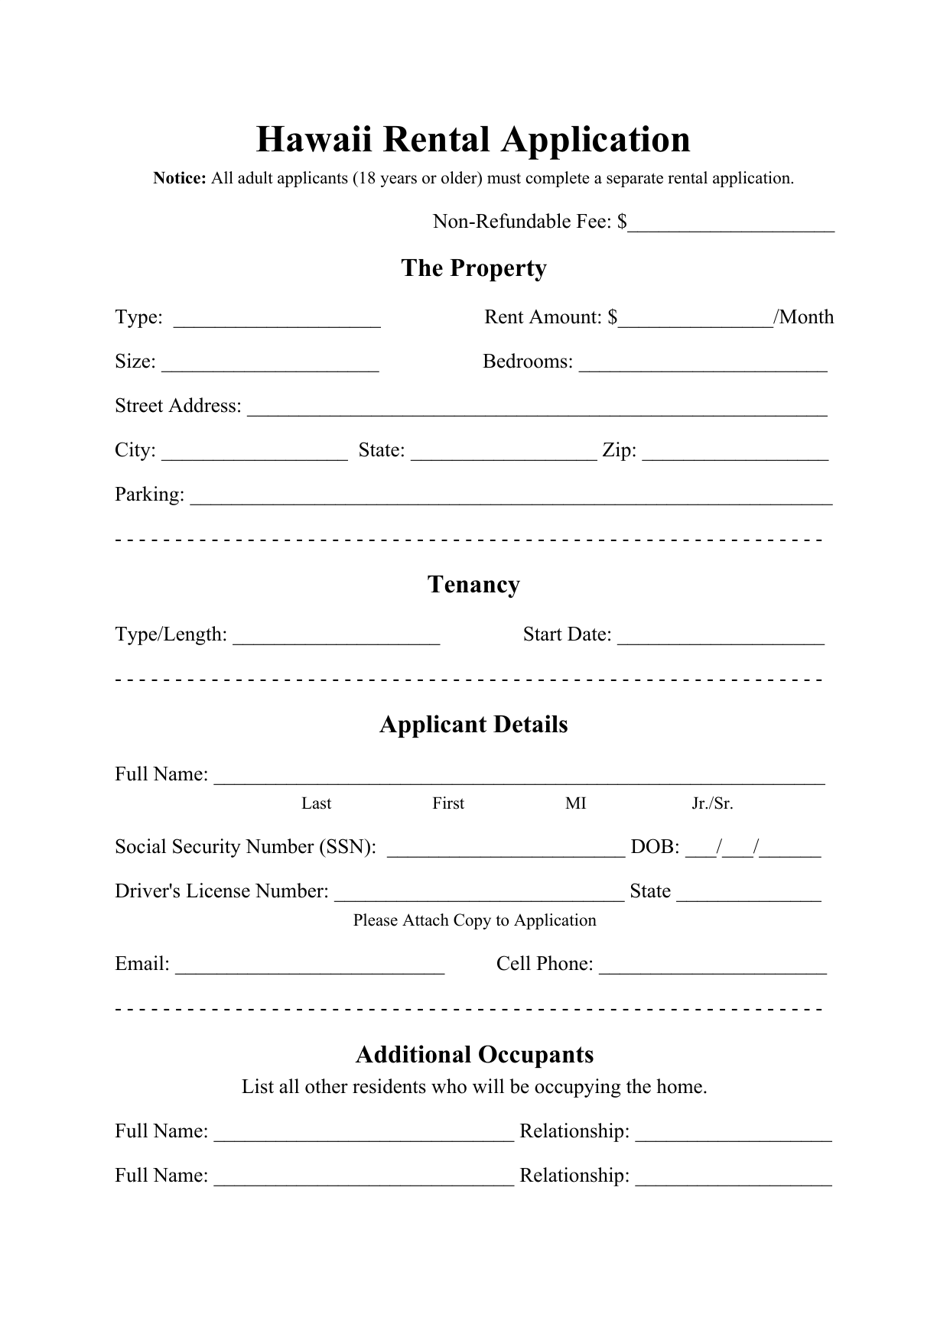 Rental Application Form - Hawaii, Page 1